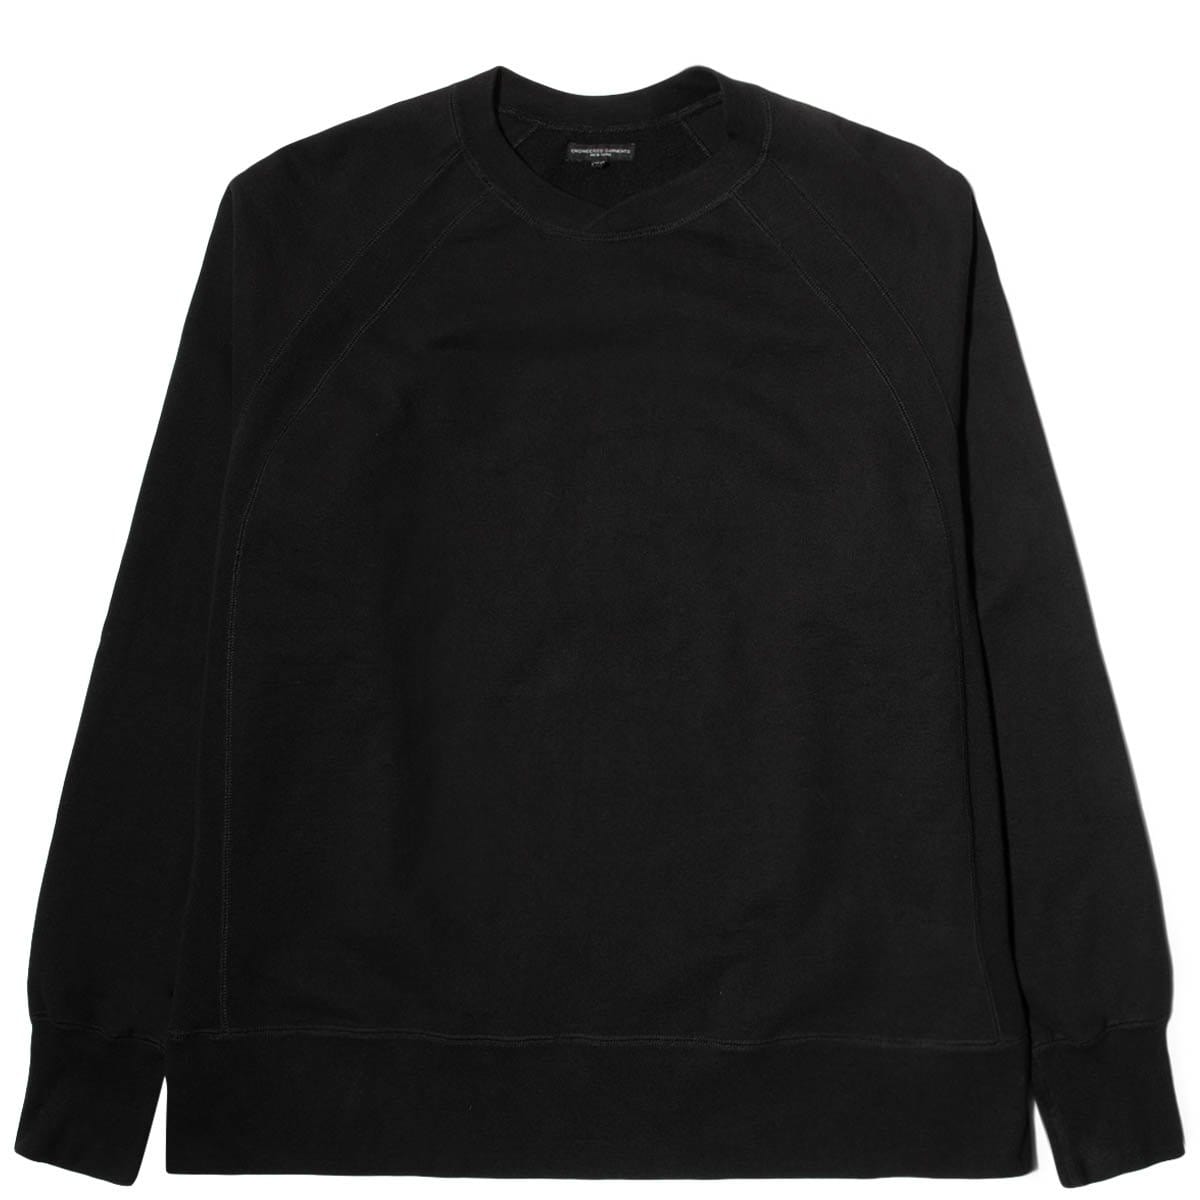 Engineered Garments Hoodies & Sweatshirts SOLID / XL PRINTED RAGLAN CREW NECK